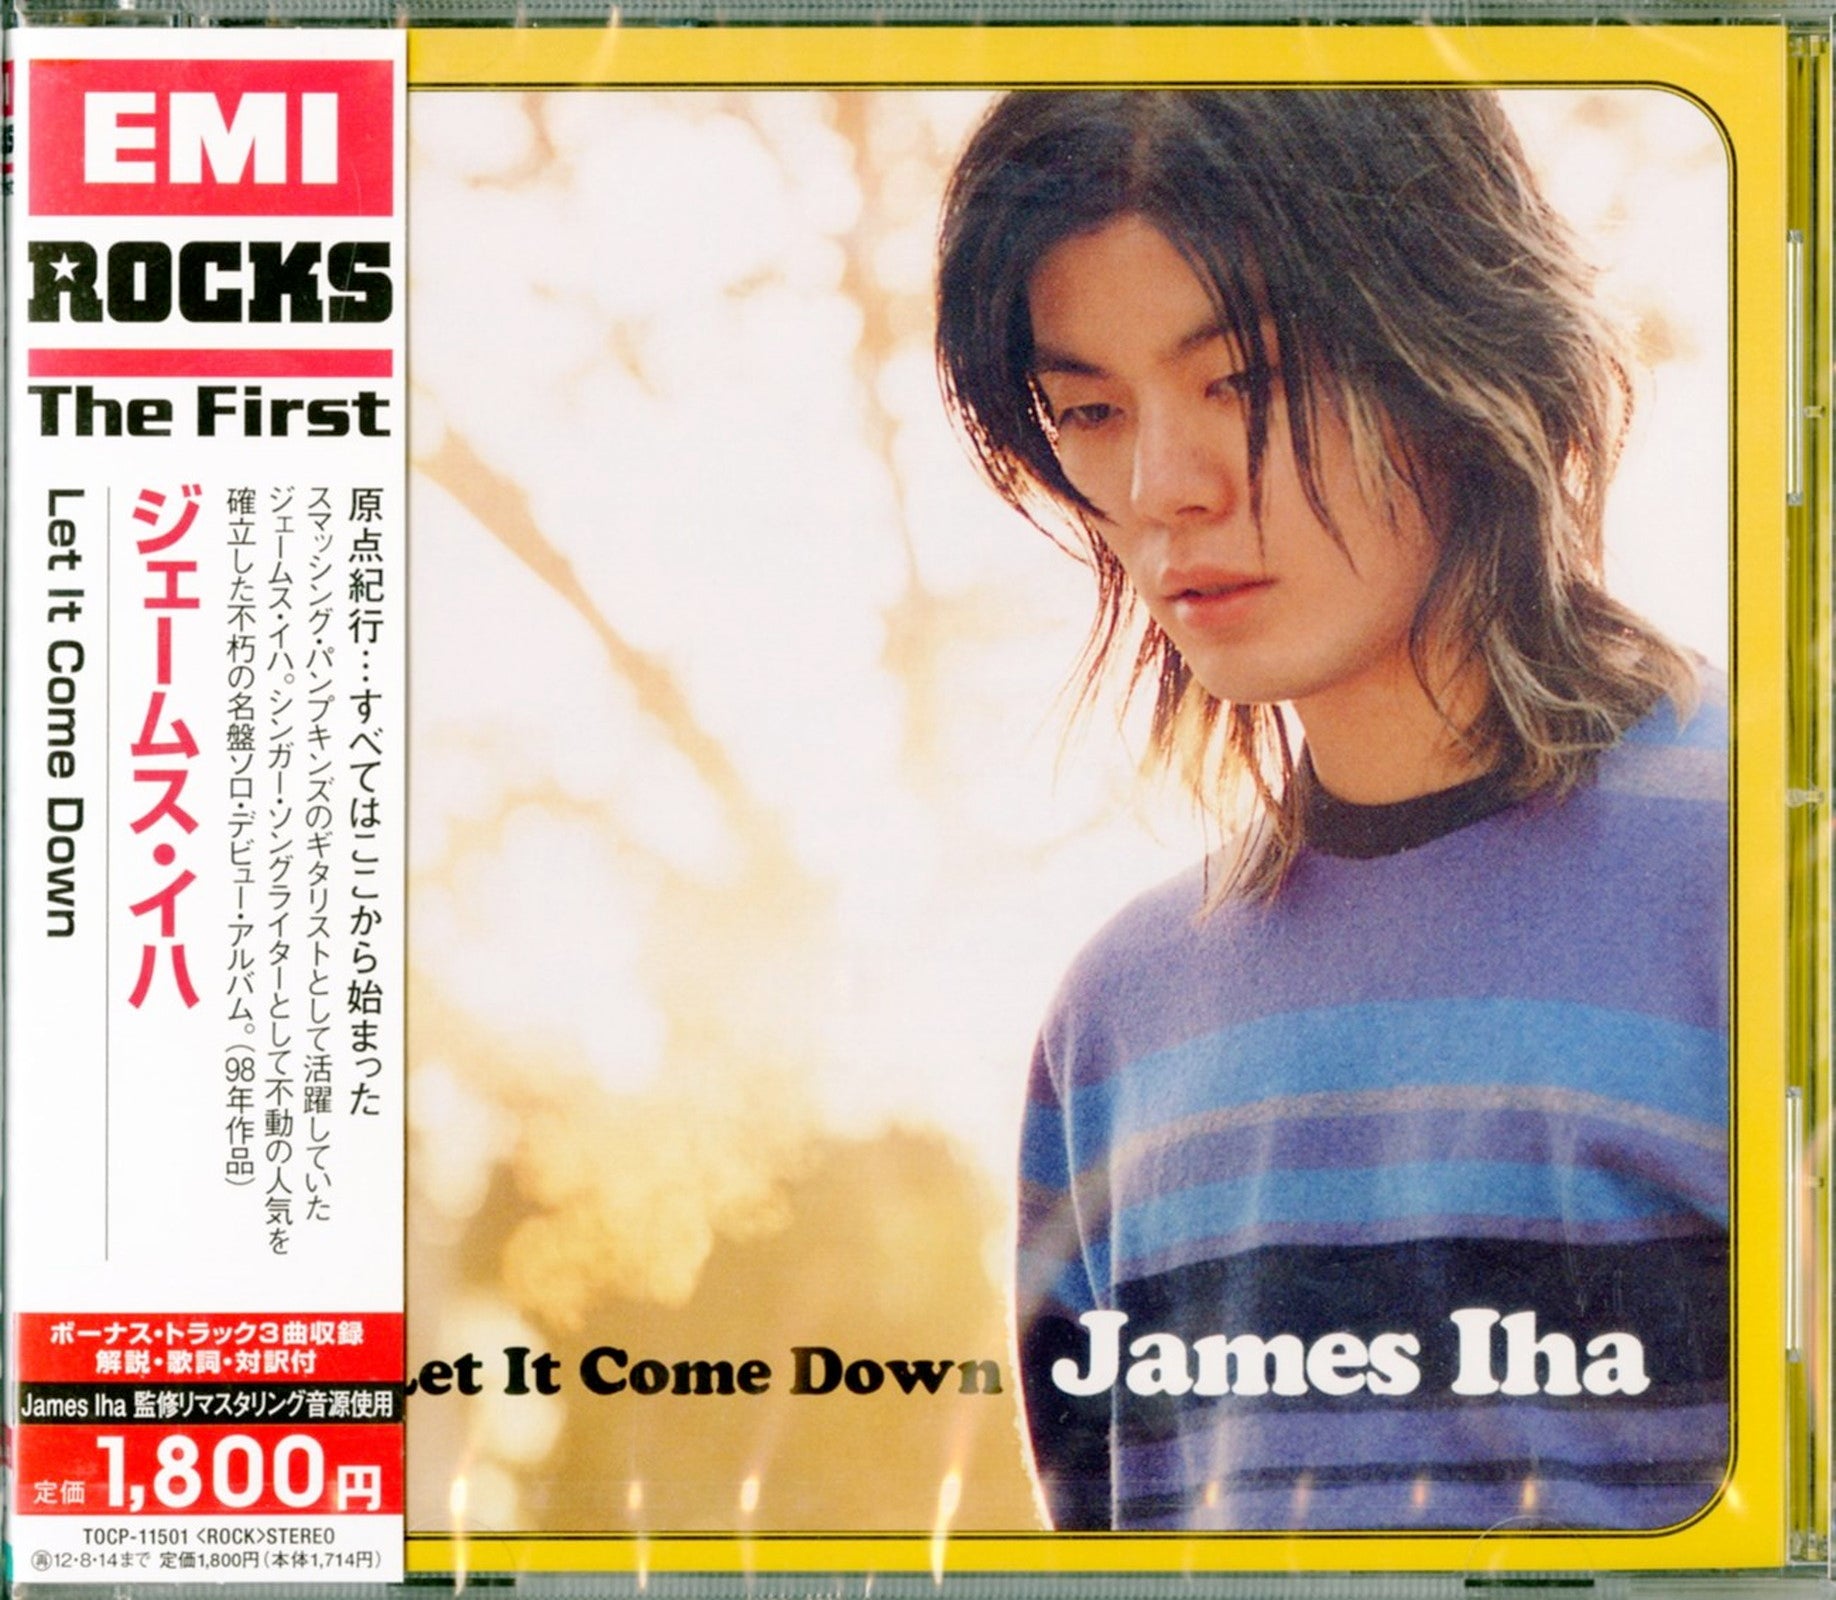 CD Let it come down James Iha - 洋楽